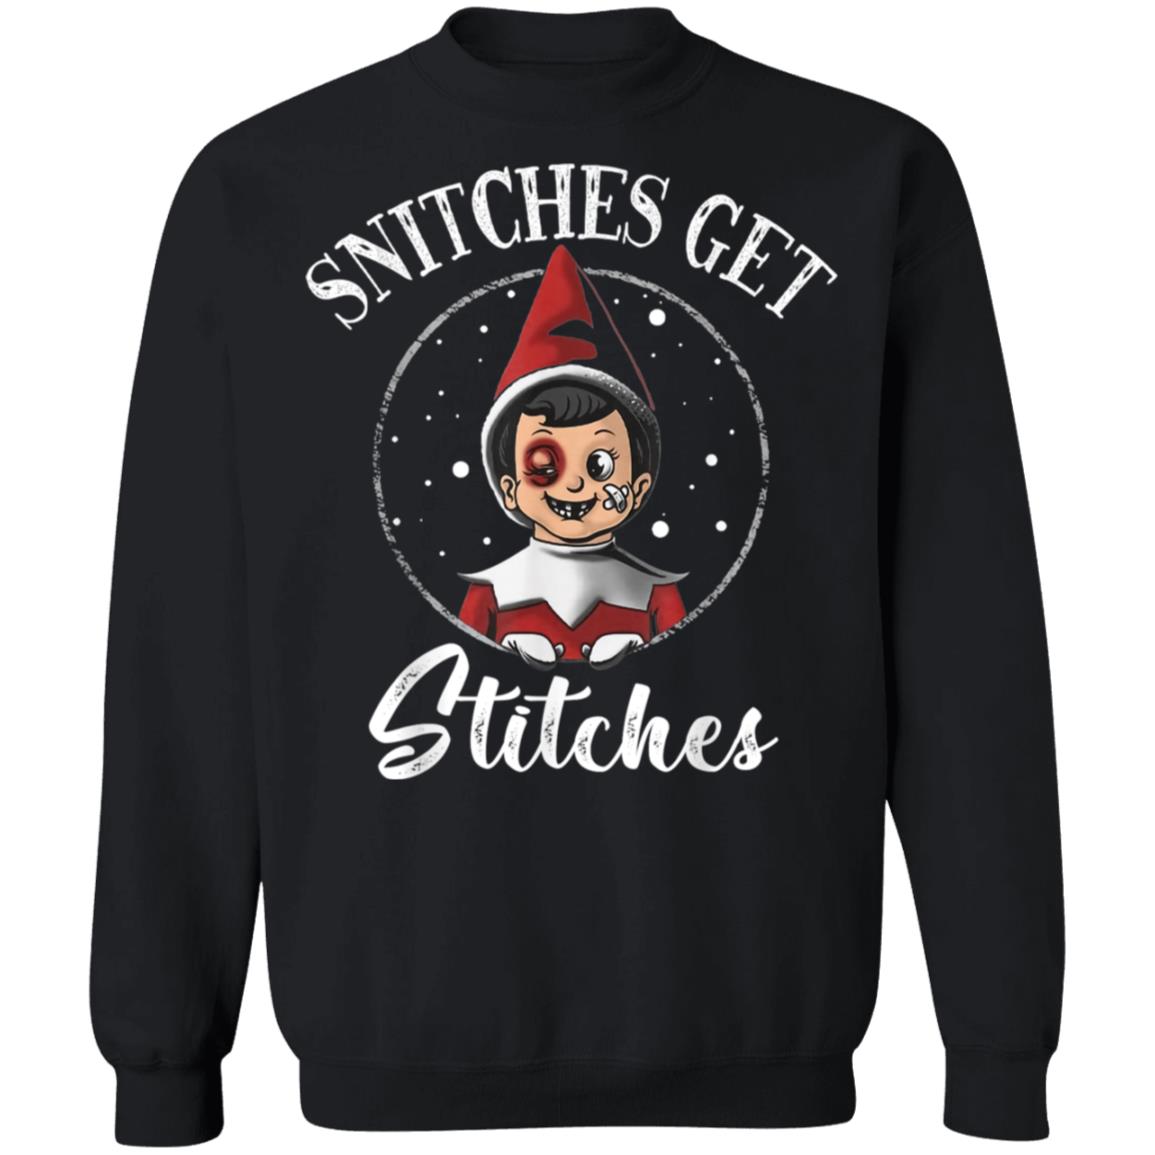 Snitches Get Stitches Shirt 1